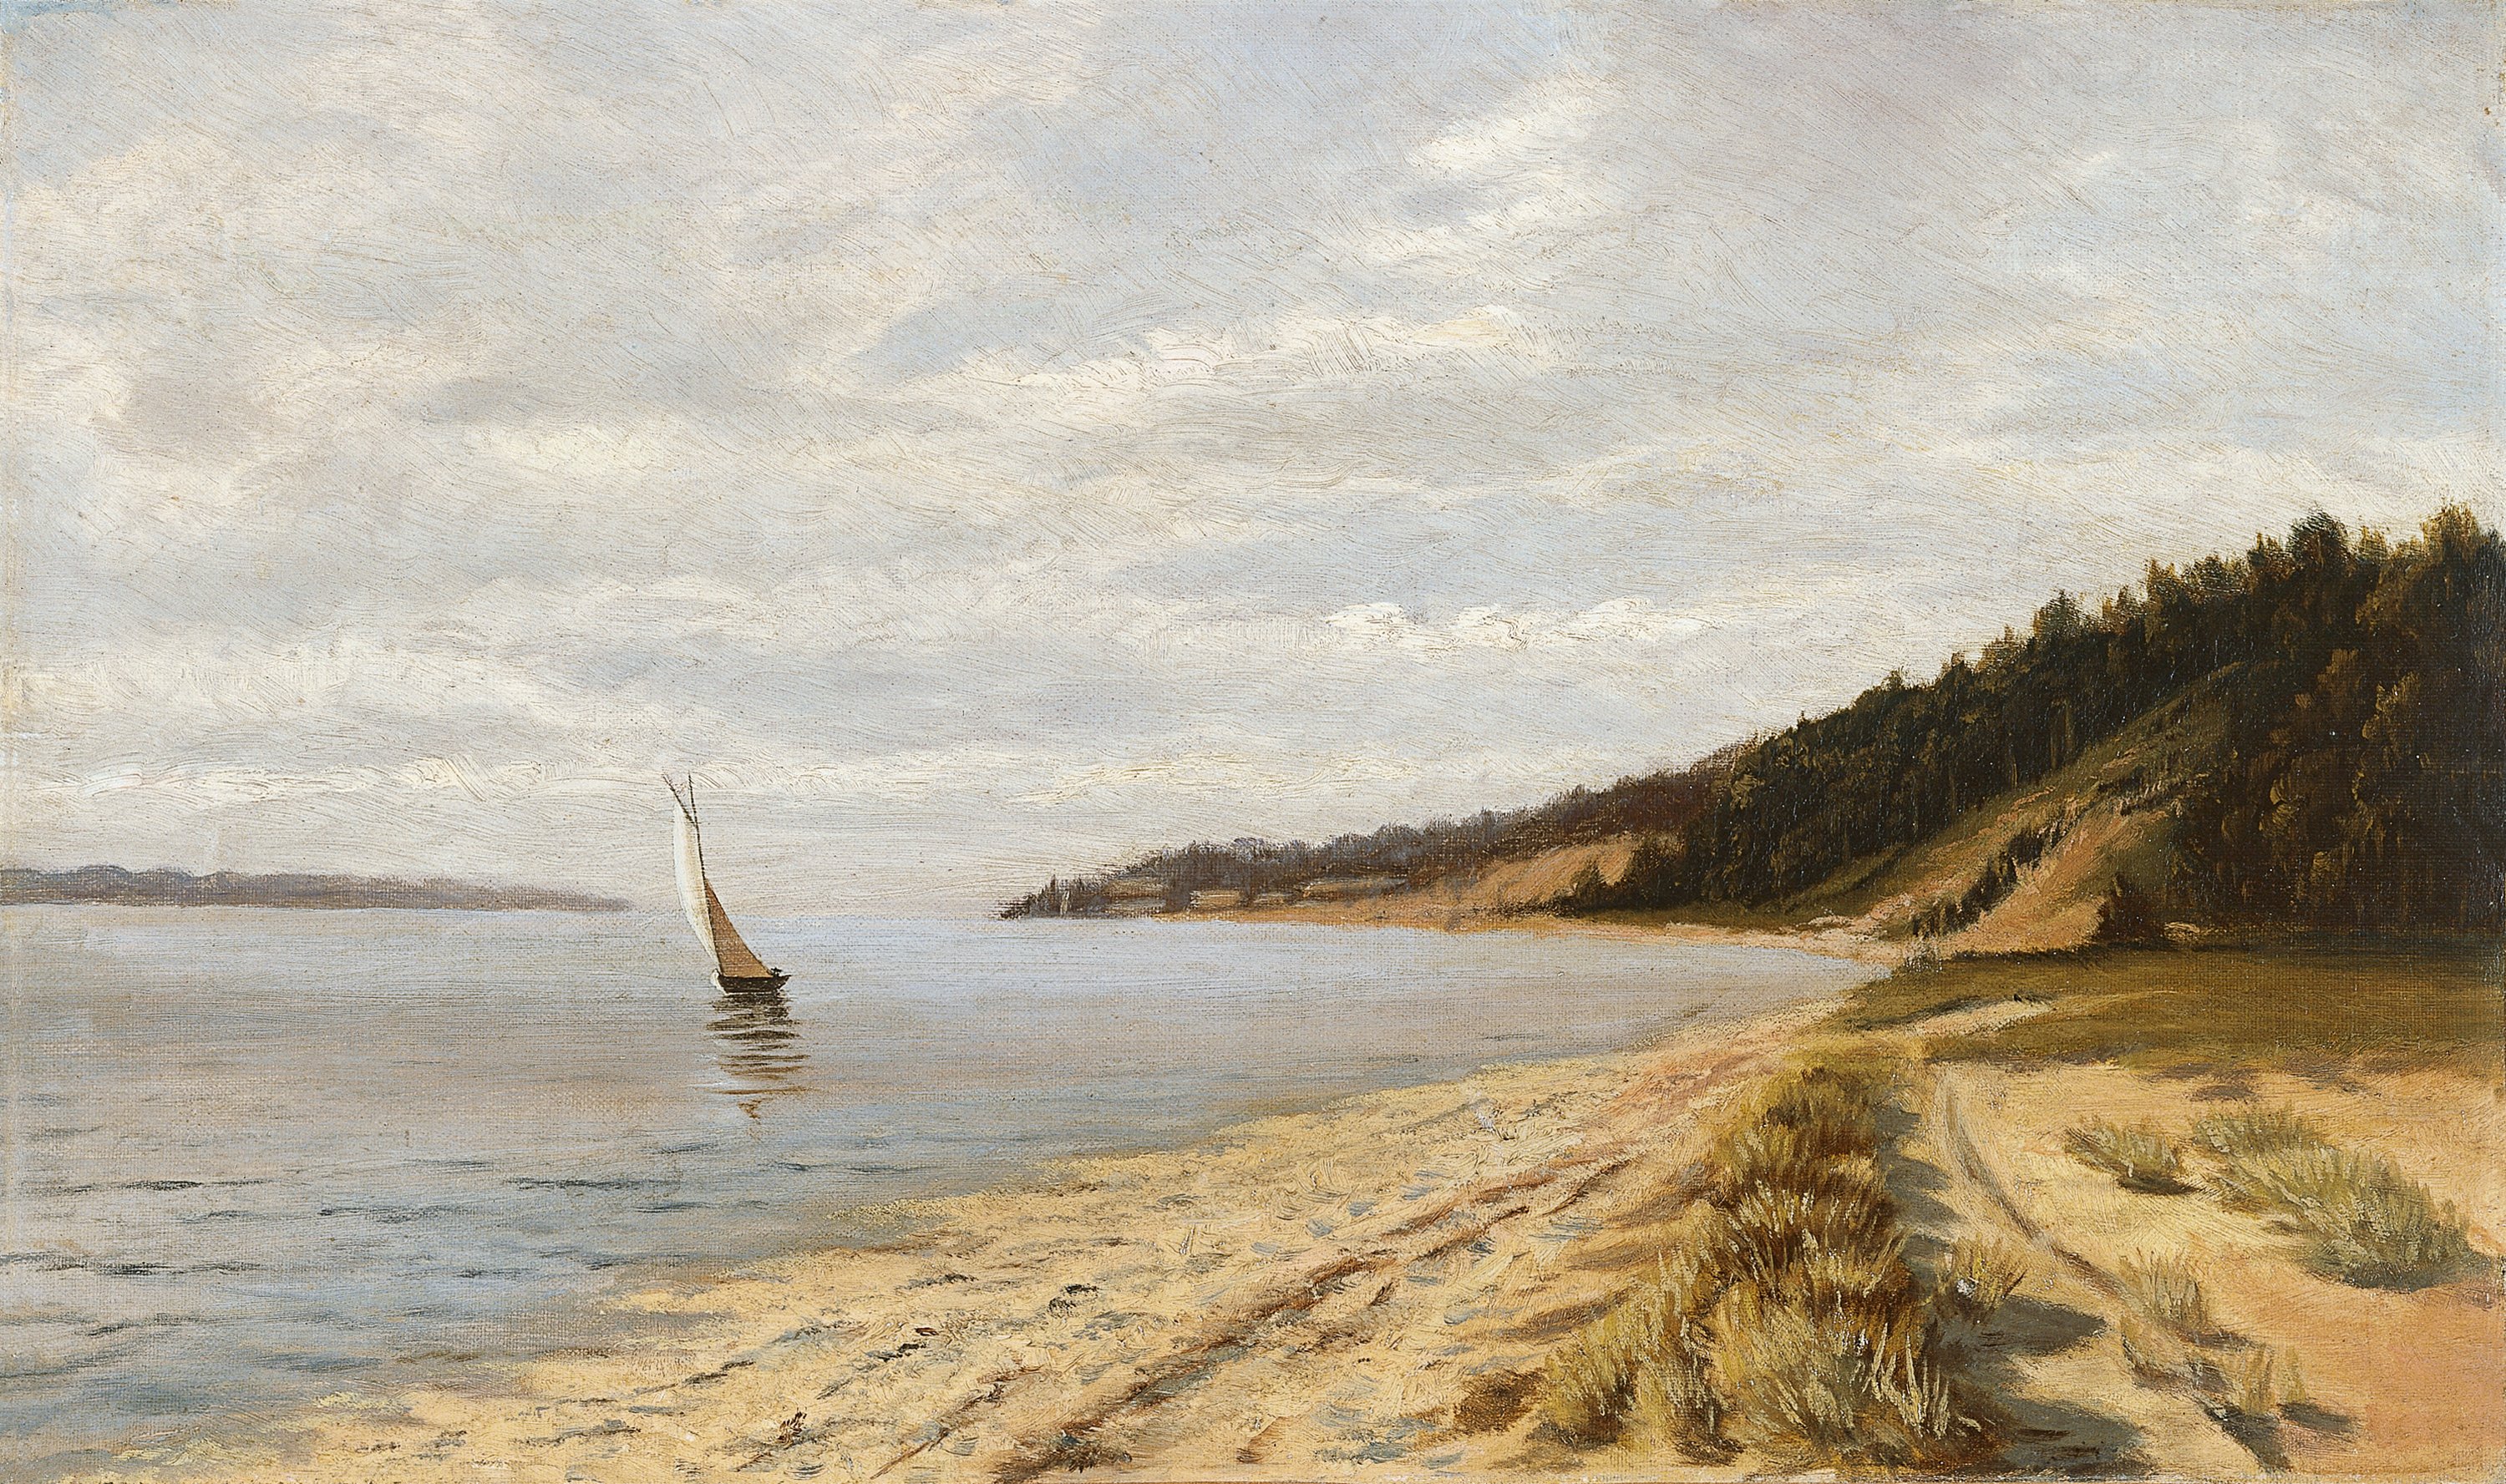 Afternoon Sailing. Navegación al atardecer, c. 1890